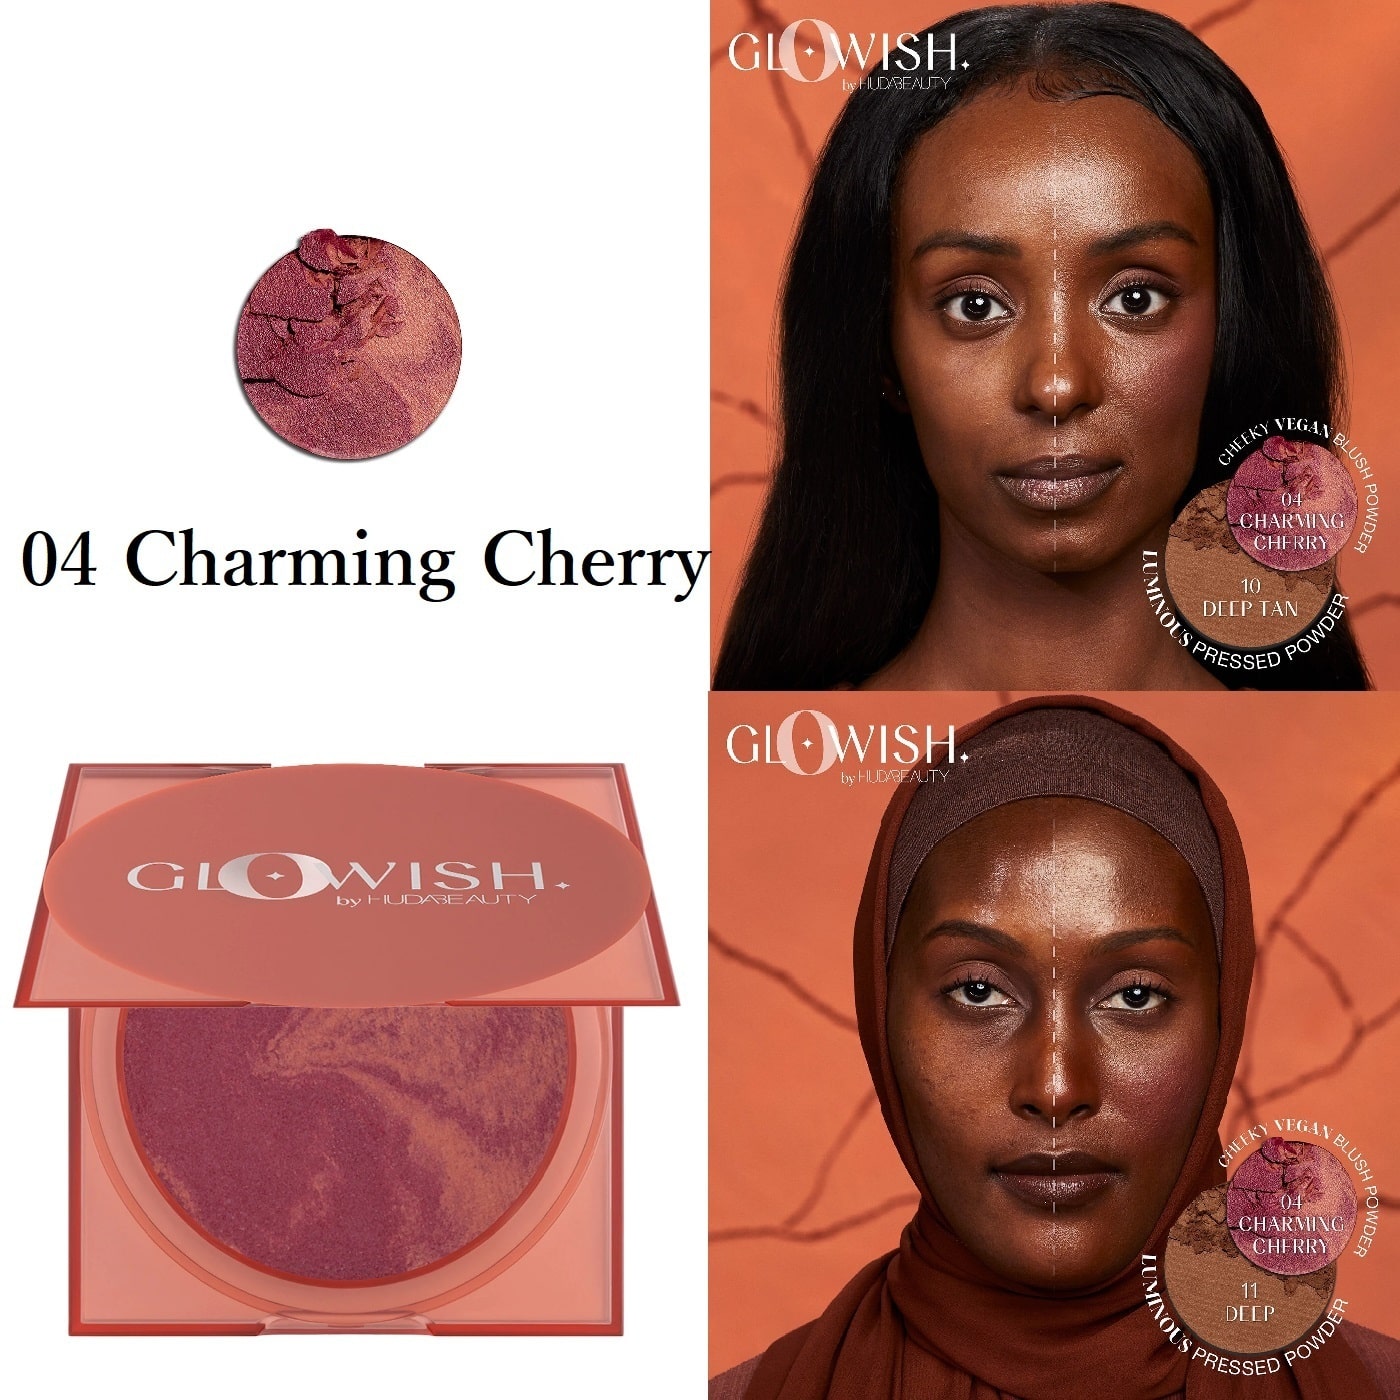 Glowish Cheeky Vegan Soft Glow Powder Blush 04 Charming Cherry